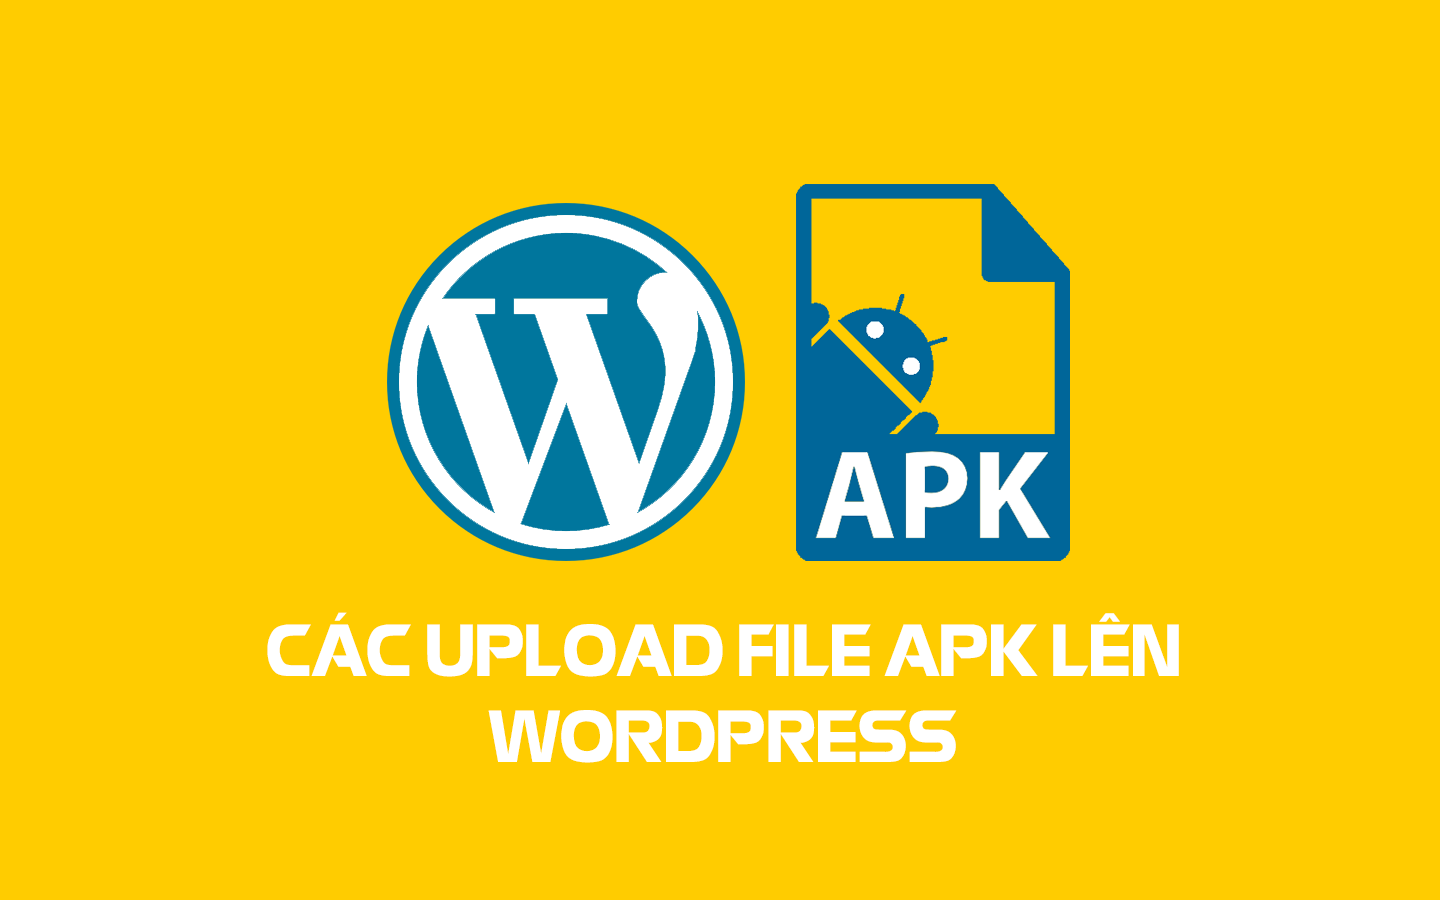 Huong dan tai file APK len WordPress mot cach don